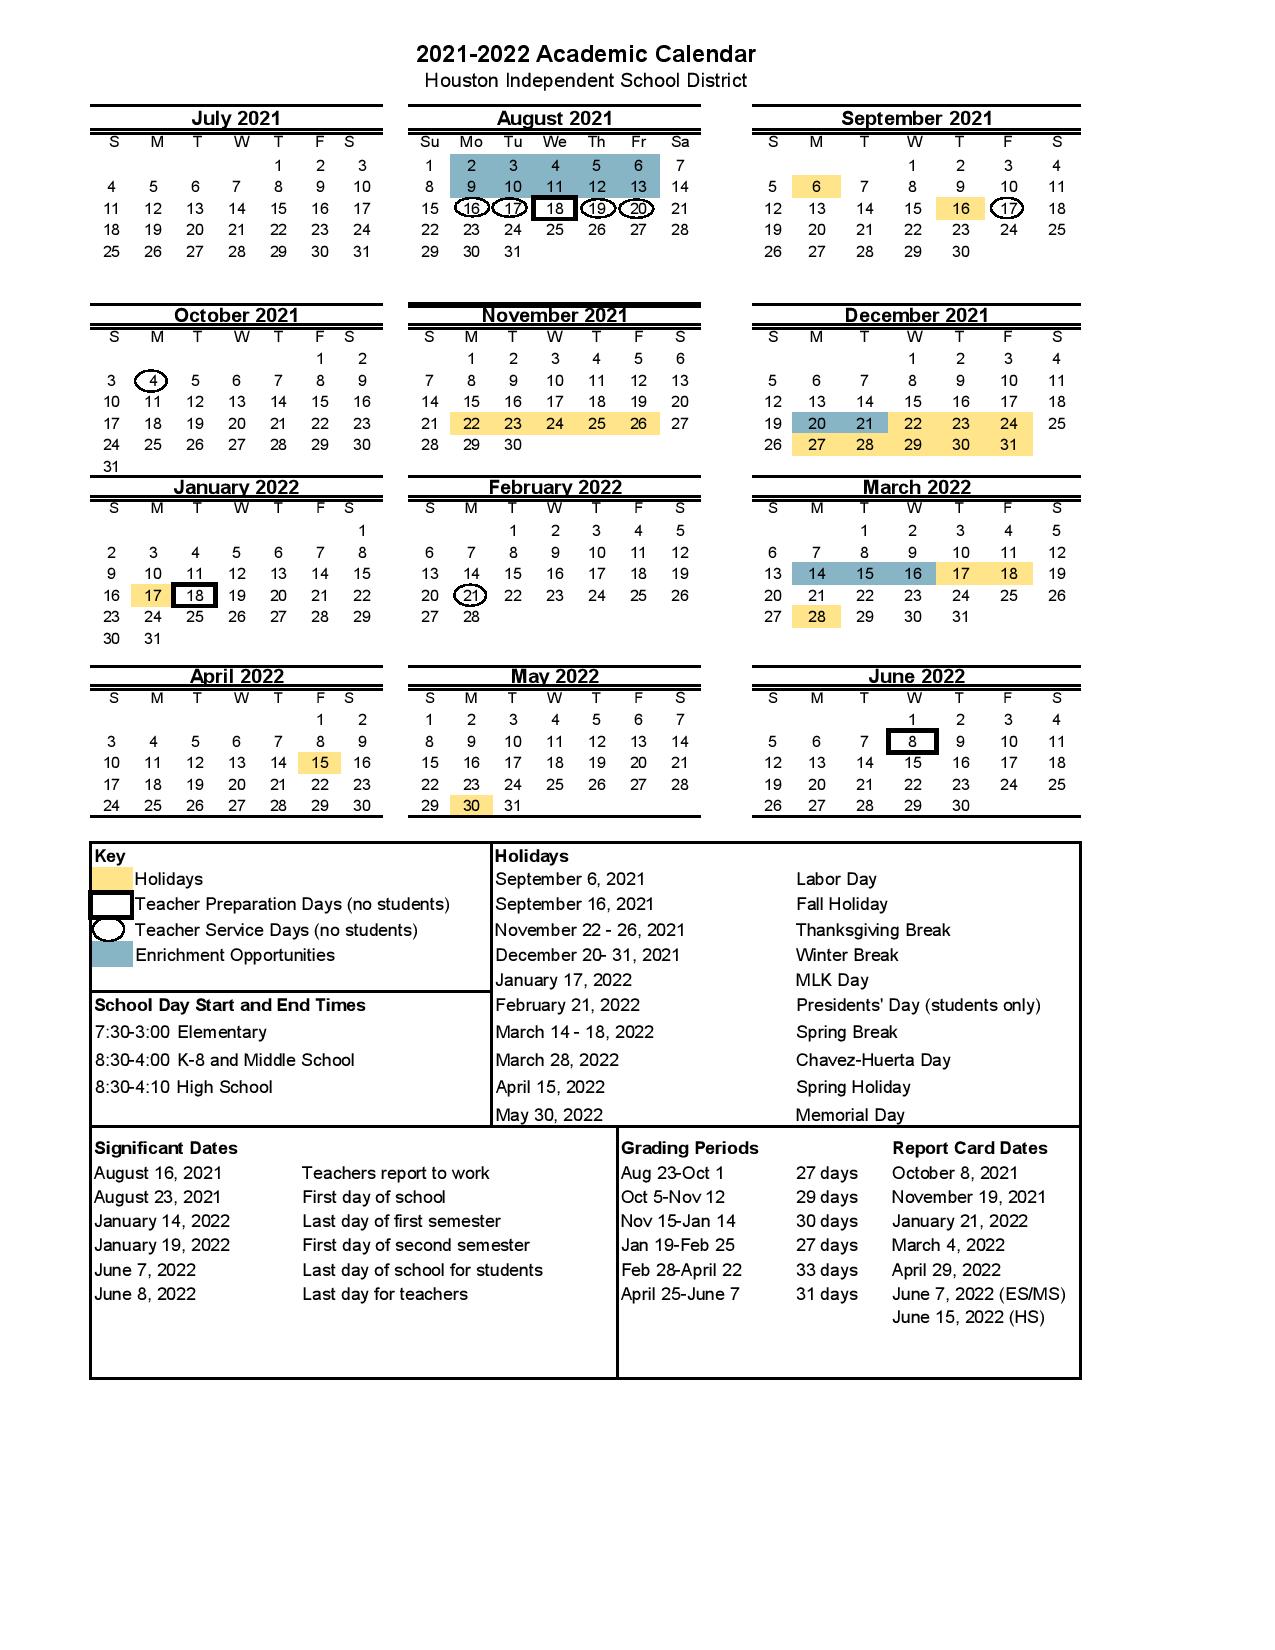 Hisd Calendar 2022 23 Houston Independent School District Calendar 2021-2022